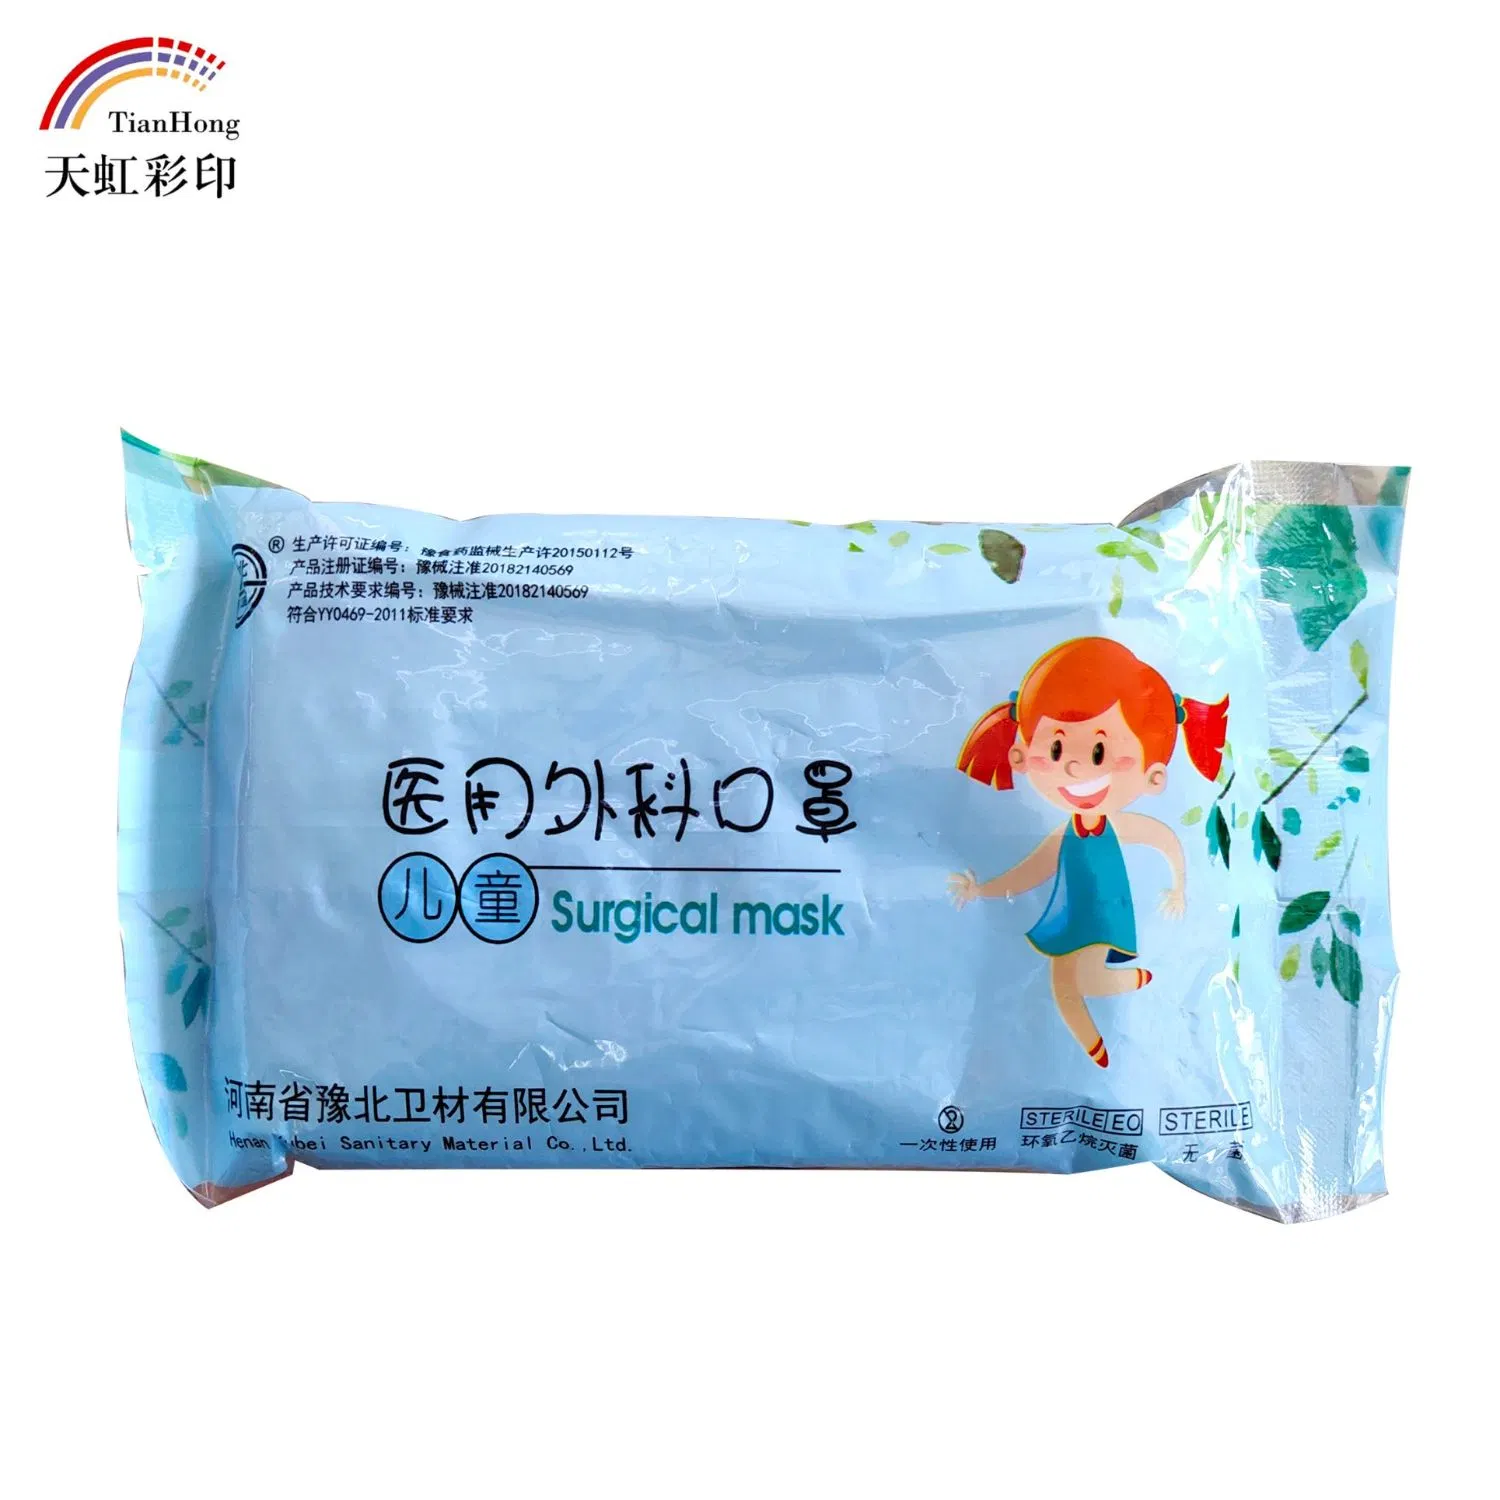 Children's Mask Plastic Packaging Bag Material Safety.